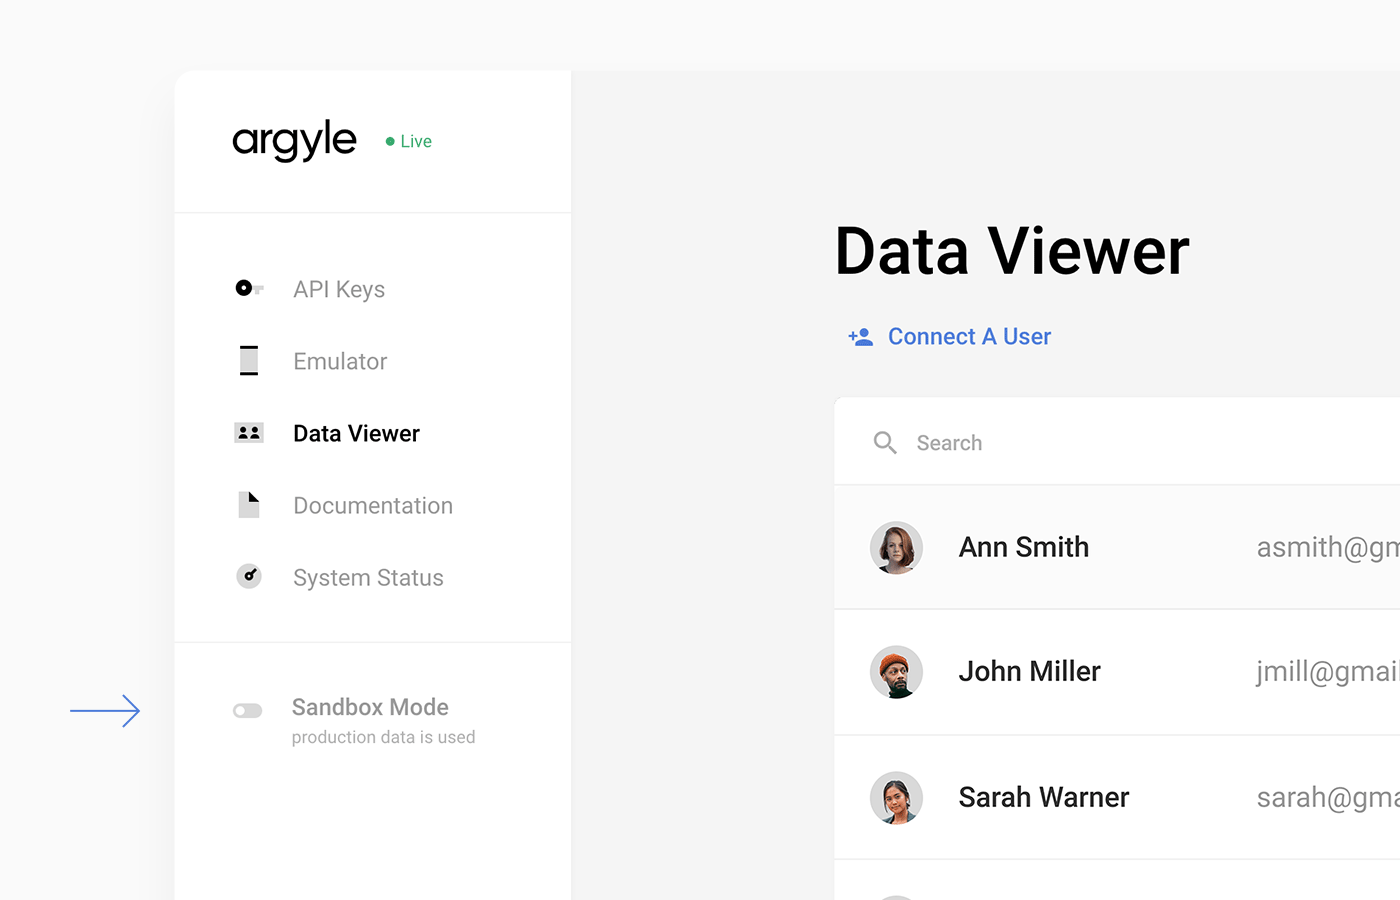 Data viewer